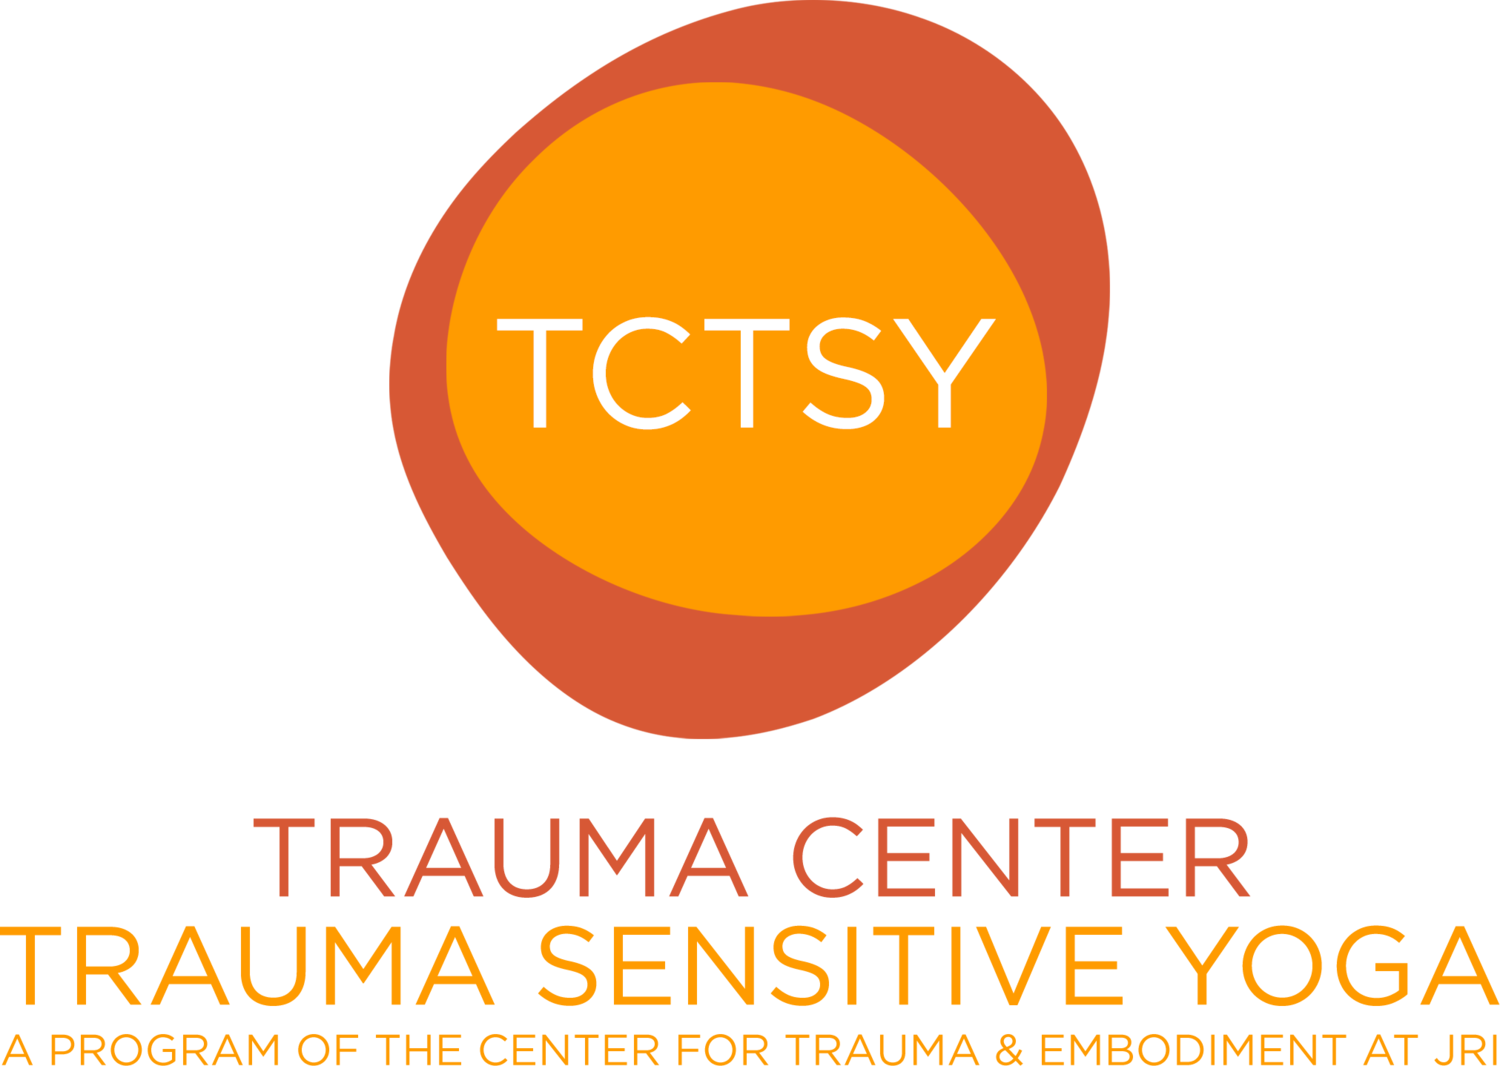 Trauma Sensitive Yoga • The Original Yoga for Trauma • 20+ Years of Research-Based Healing for Complex Trauma and PTSD